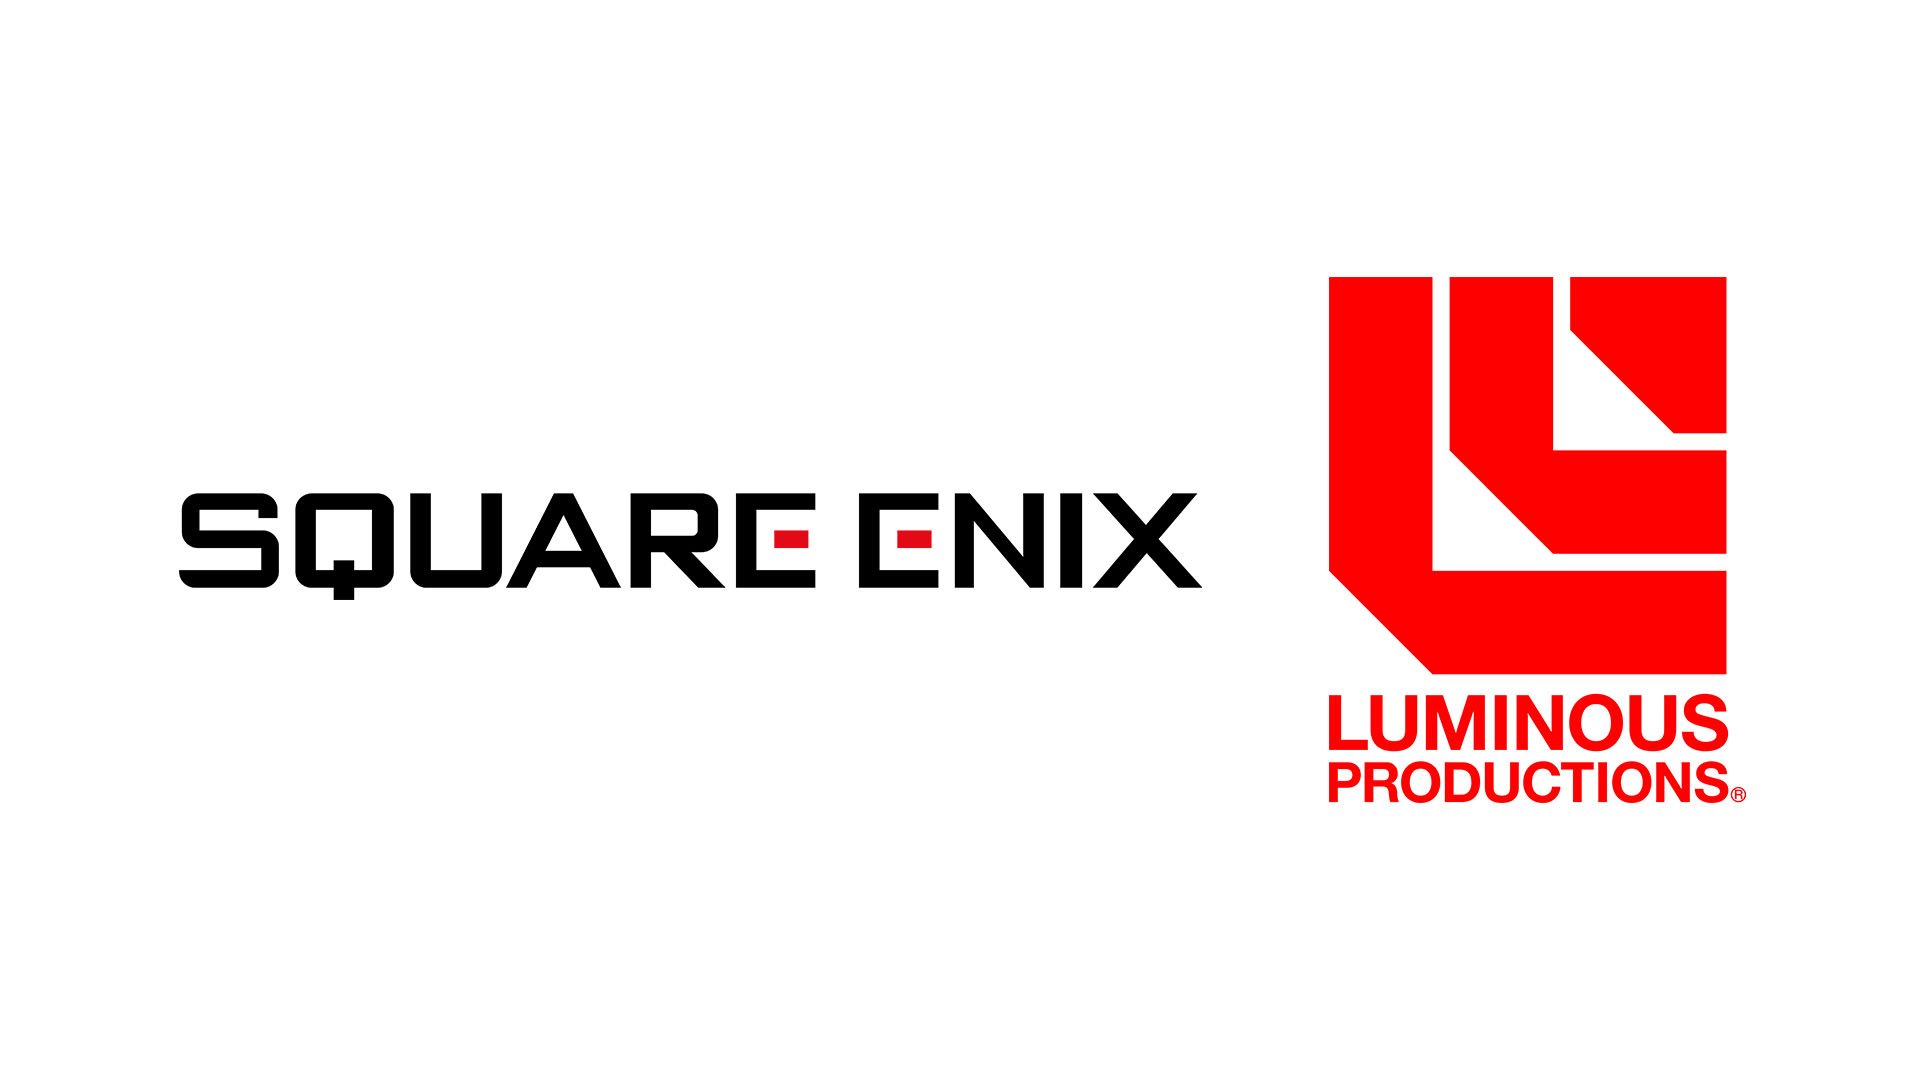 Luminous Productions fusioniert am 1. Mai mit Square Enix